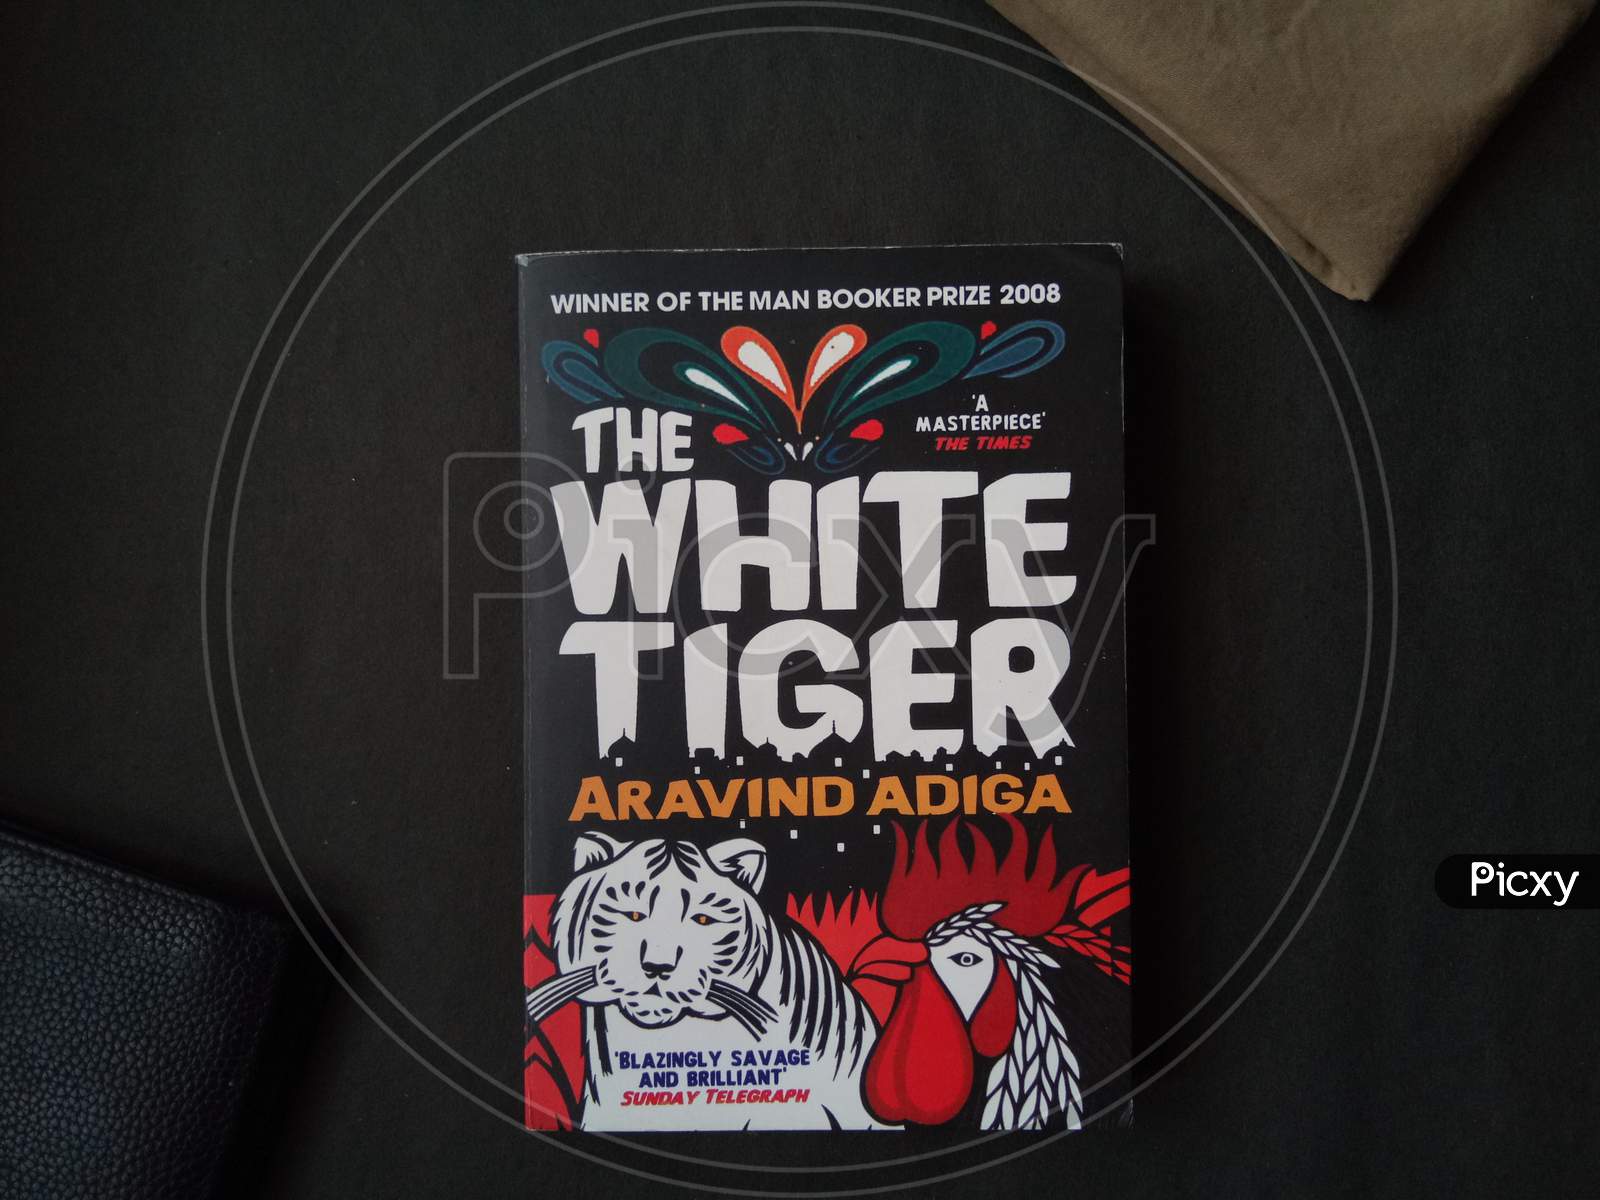 The white tiger by Aravind Adiga